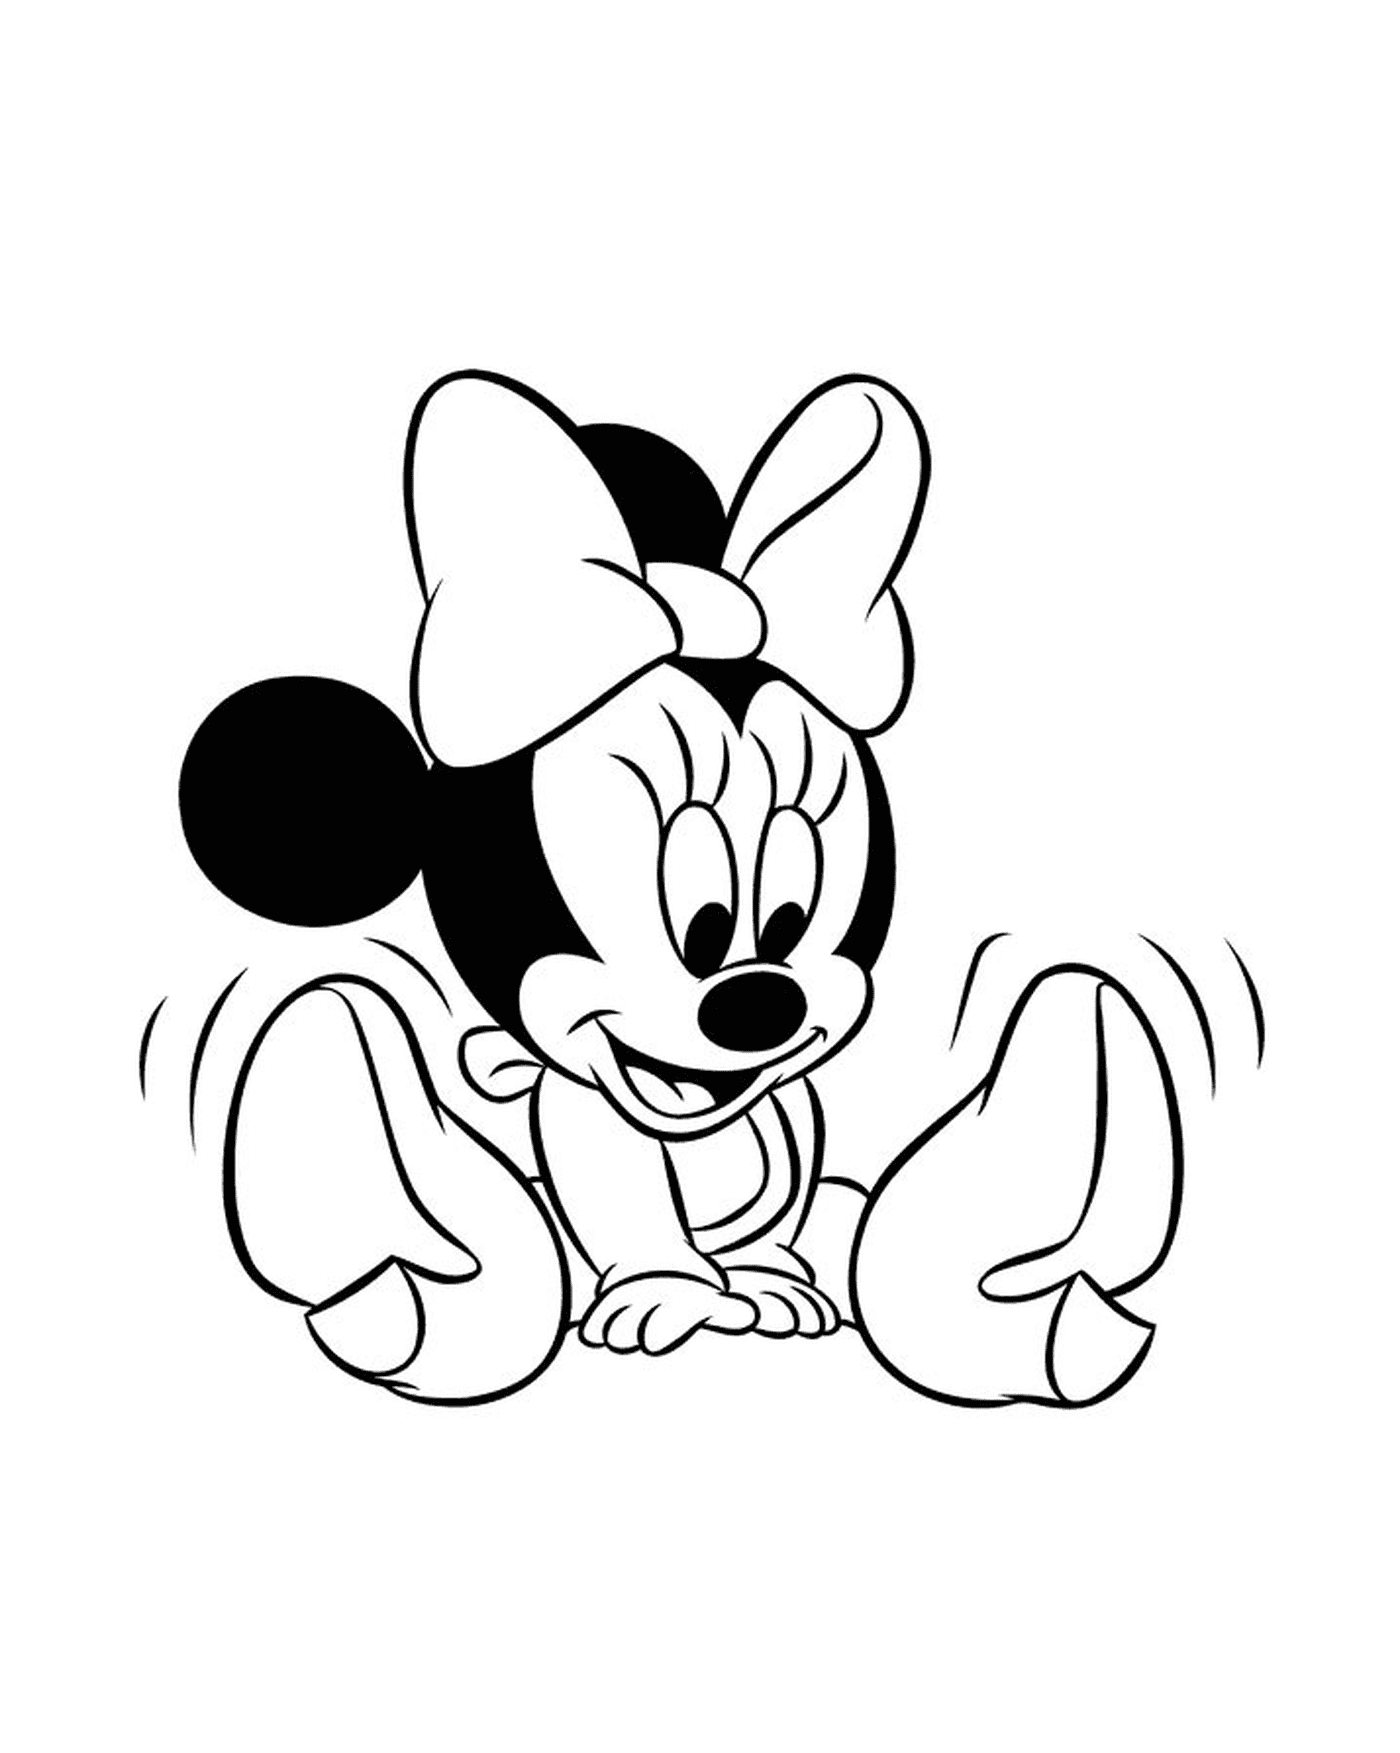  Minnie Mouse bambino seduto sul pavimento, gambe incrociate 